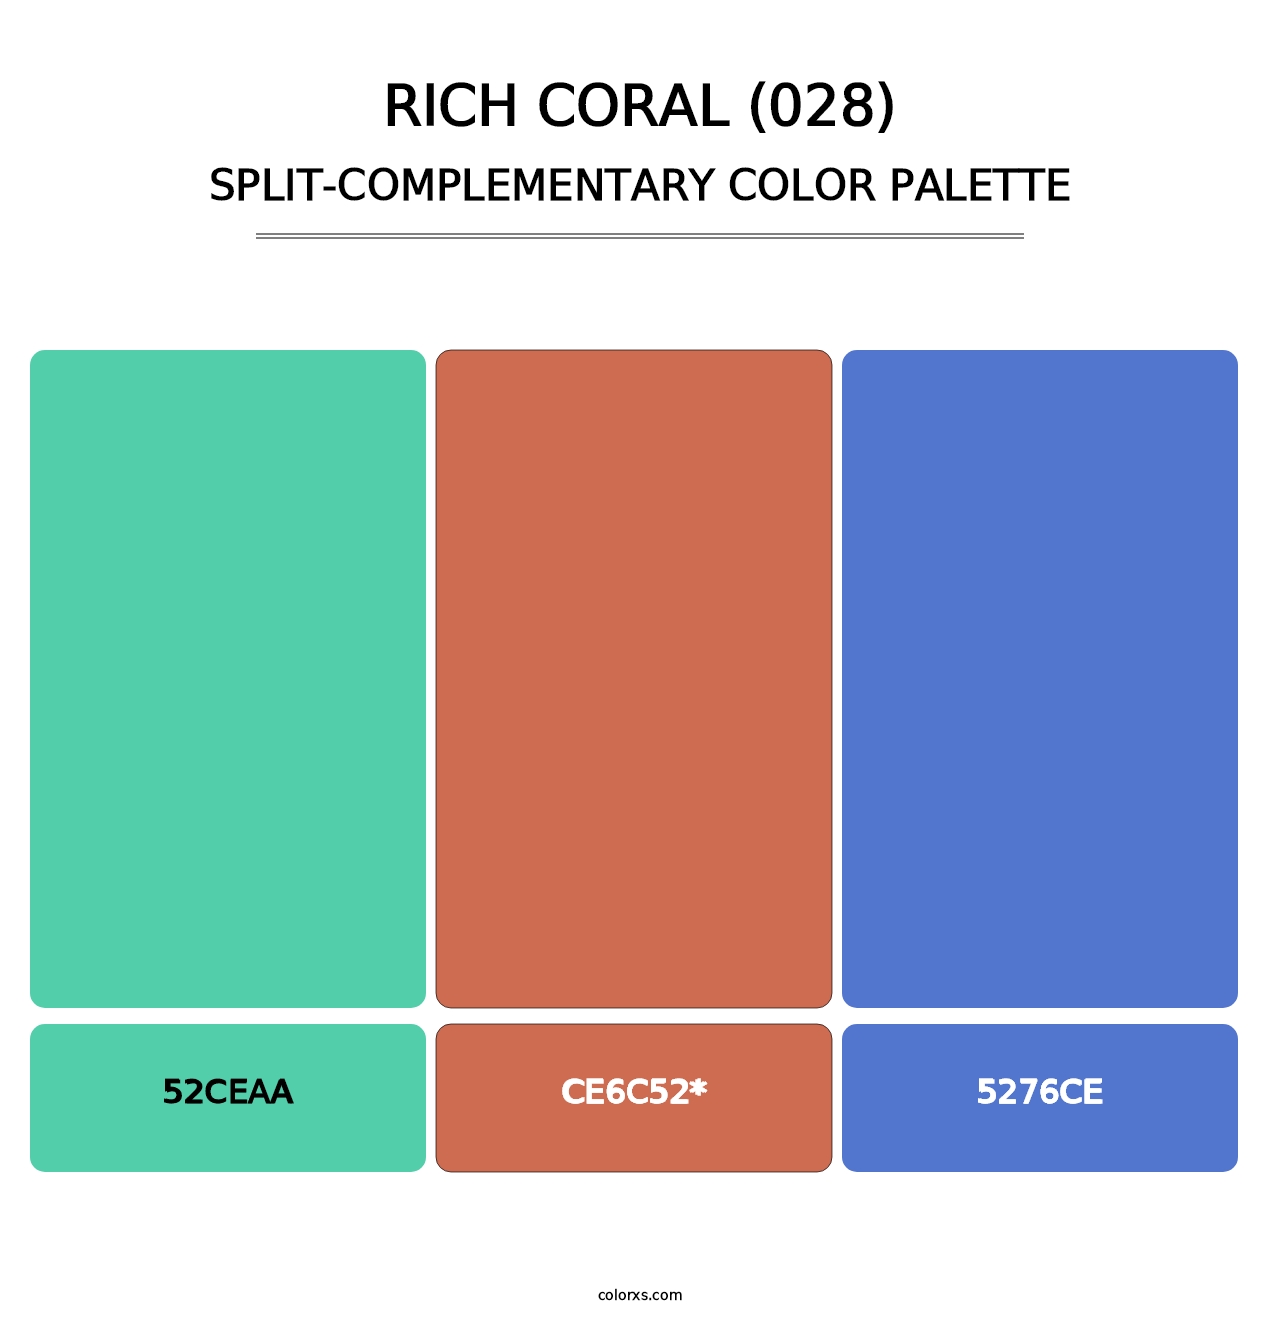 Rich Coral (028) - Split-Complementary Color Palette